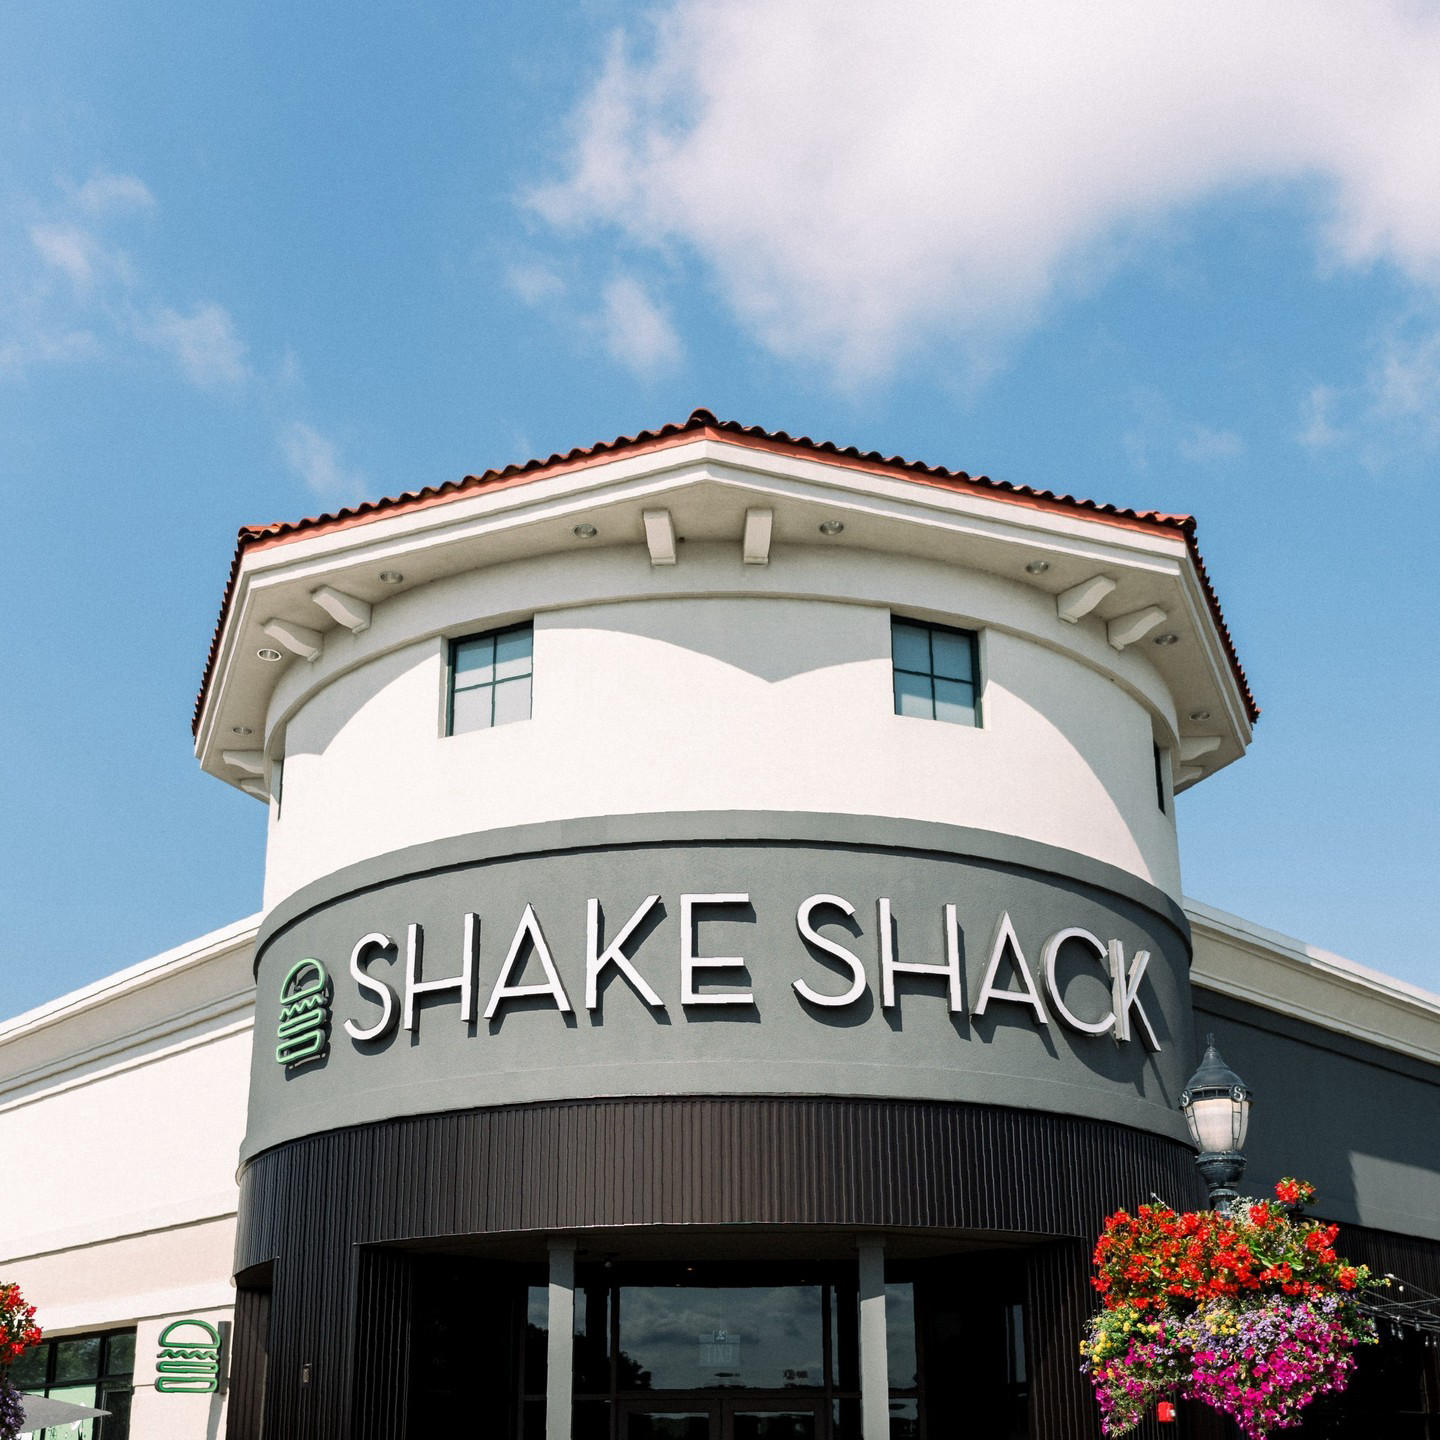 SHAKE SHACK - Nothing but blue skies and ShackBurgers ahead